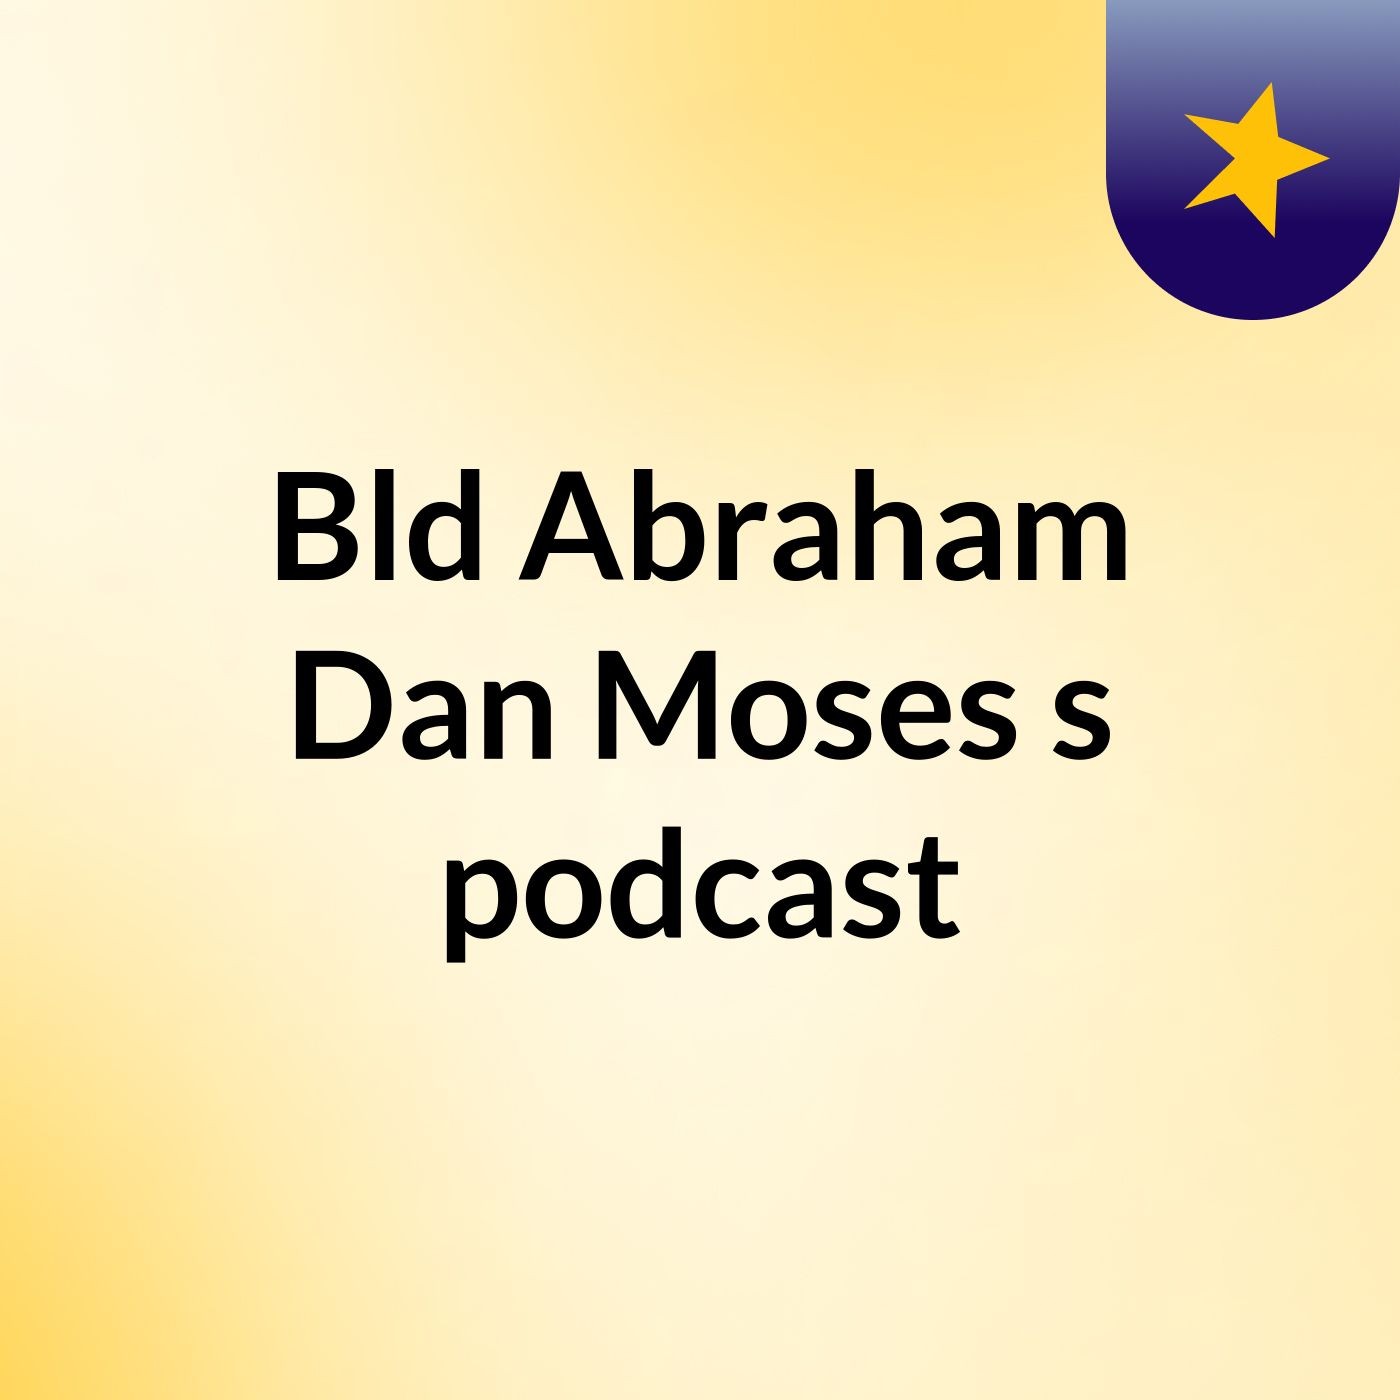 Bld Abraham Dan Moses's podcast